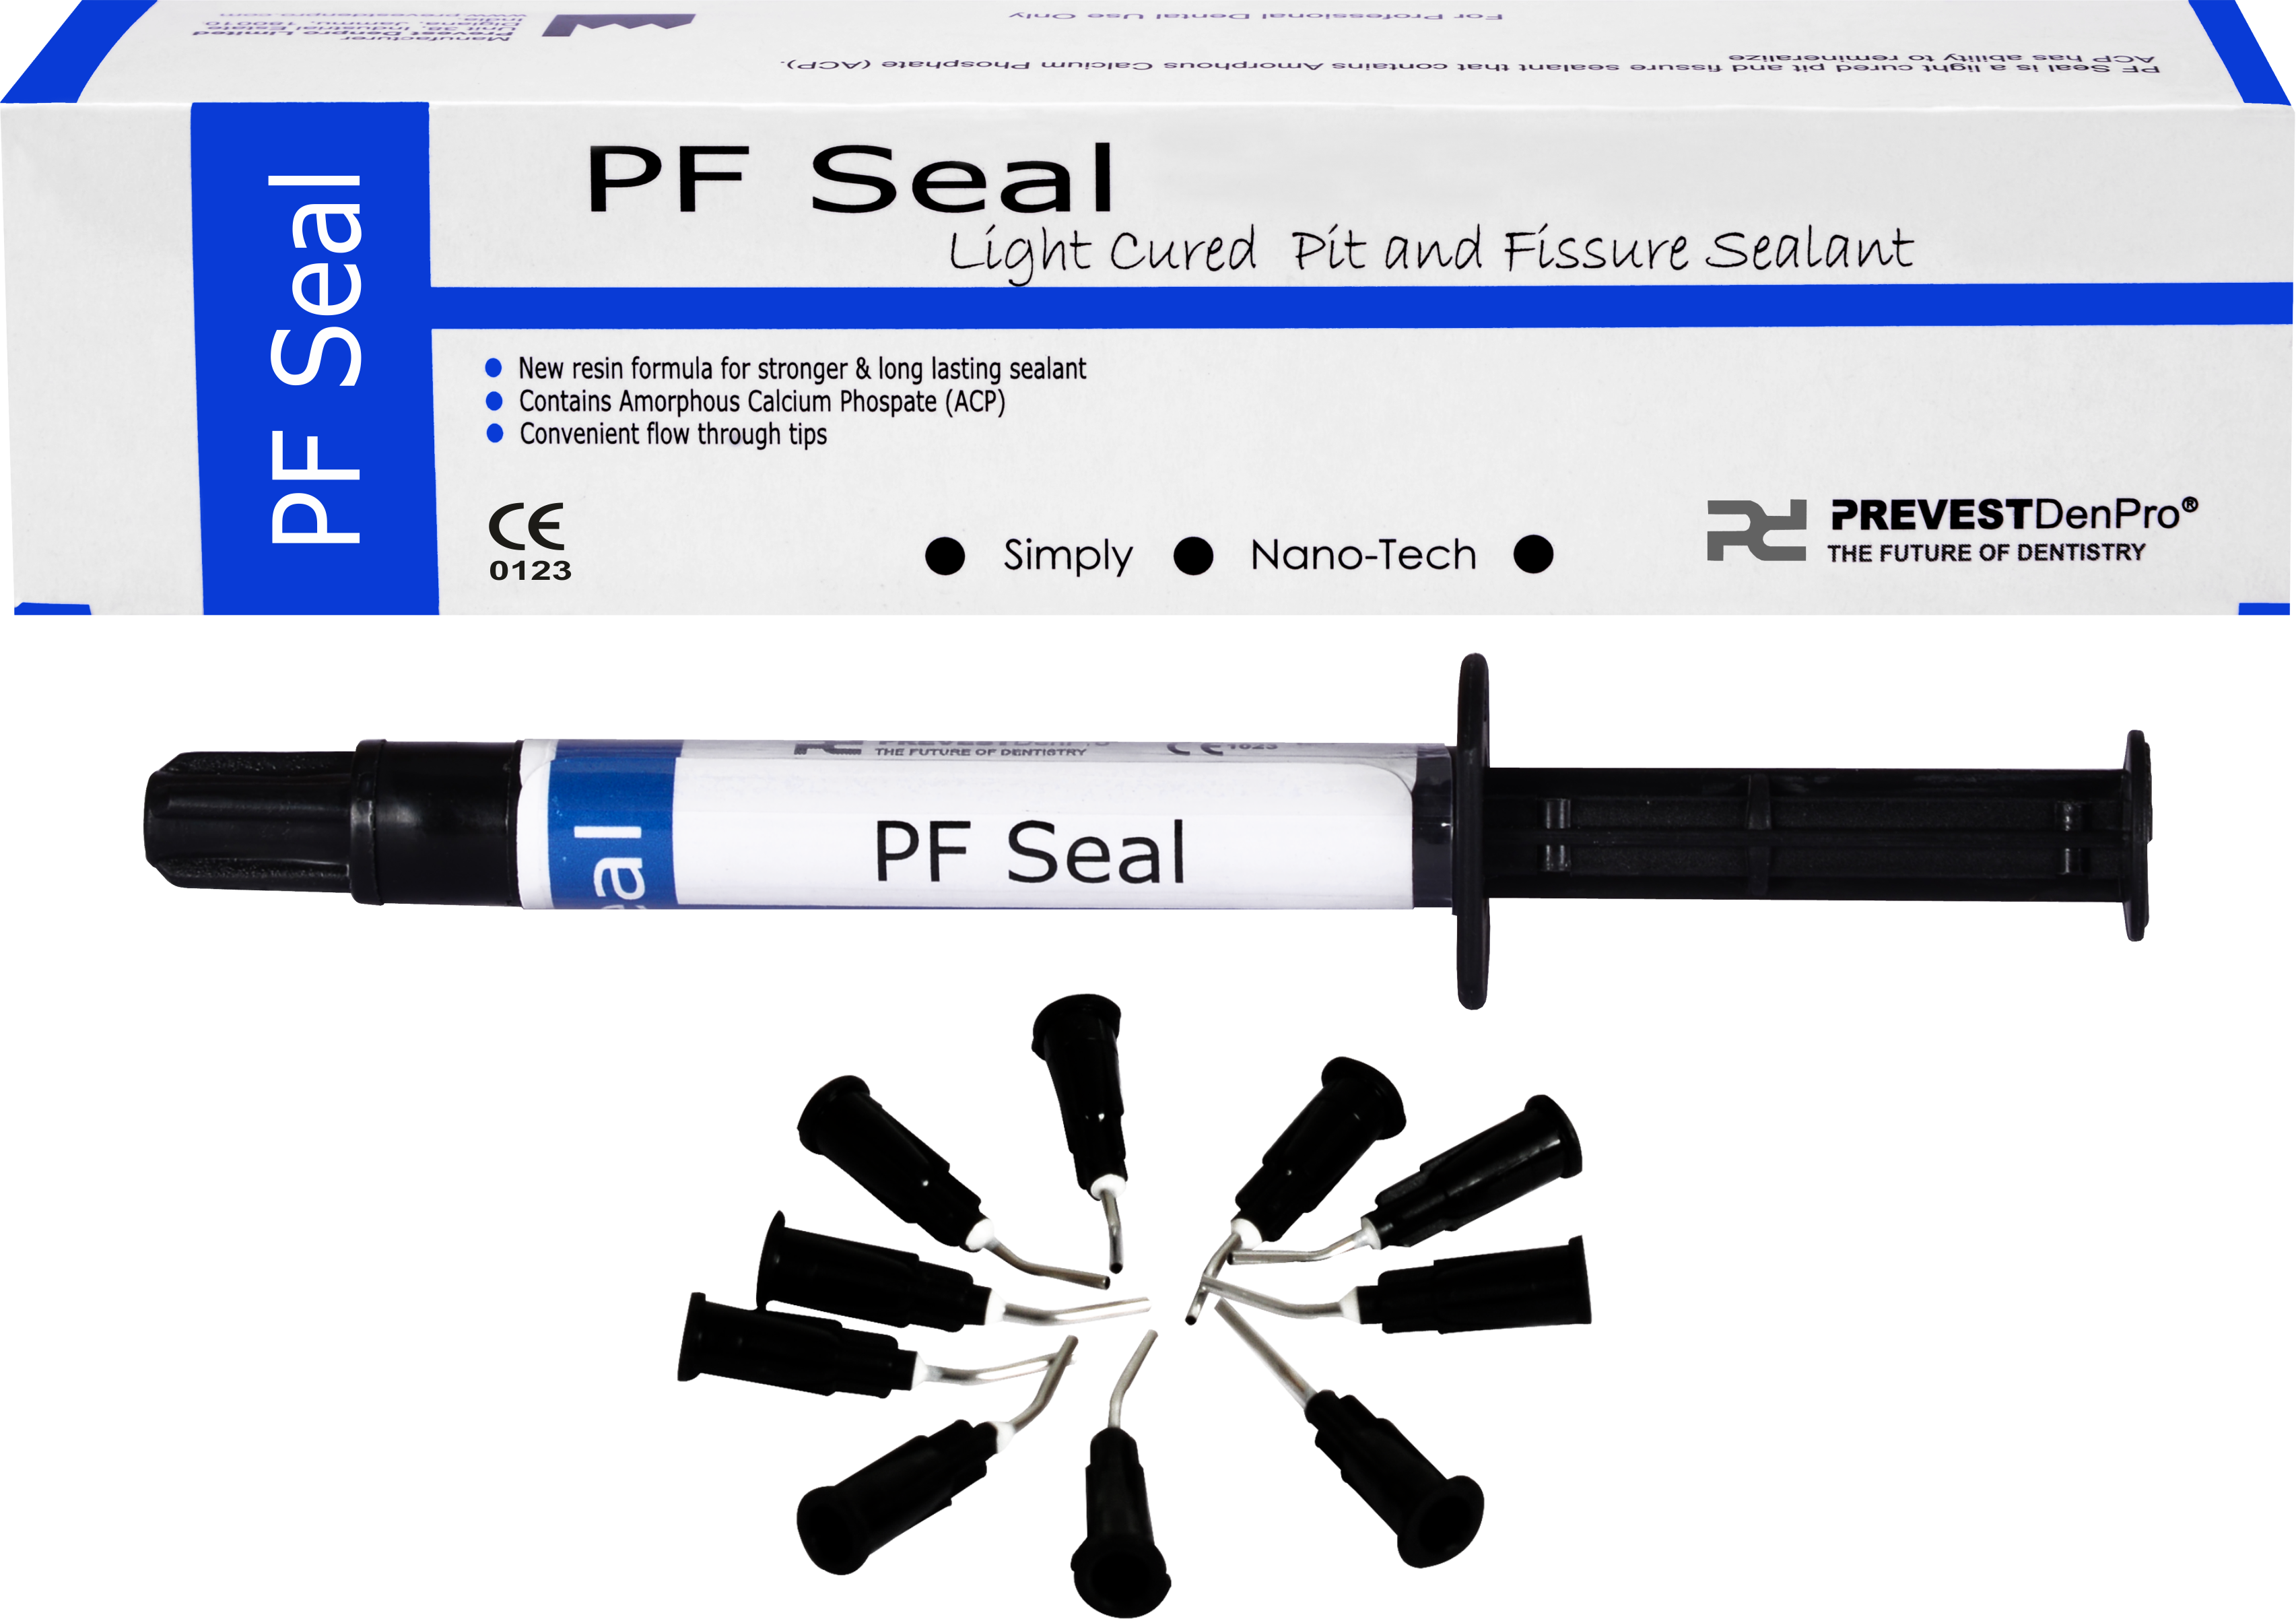 PF Seal